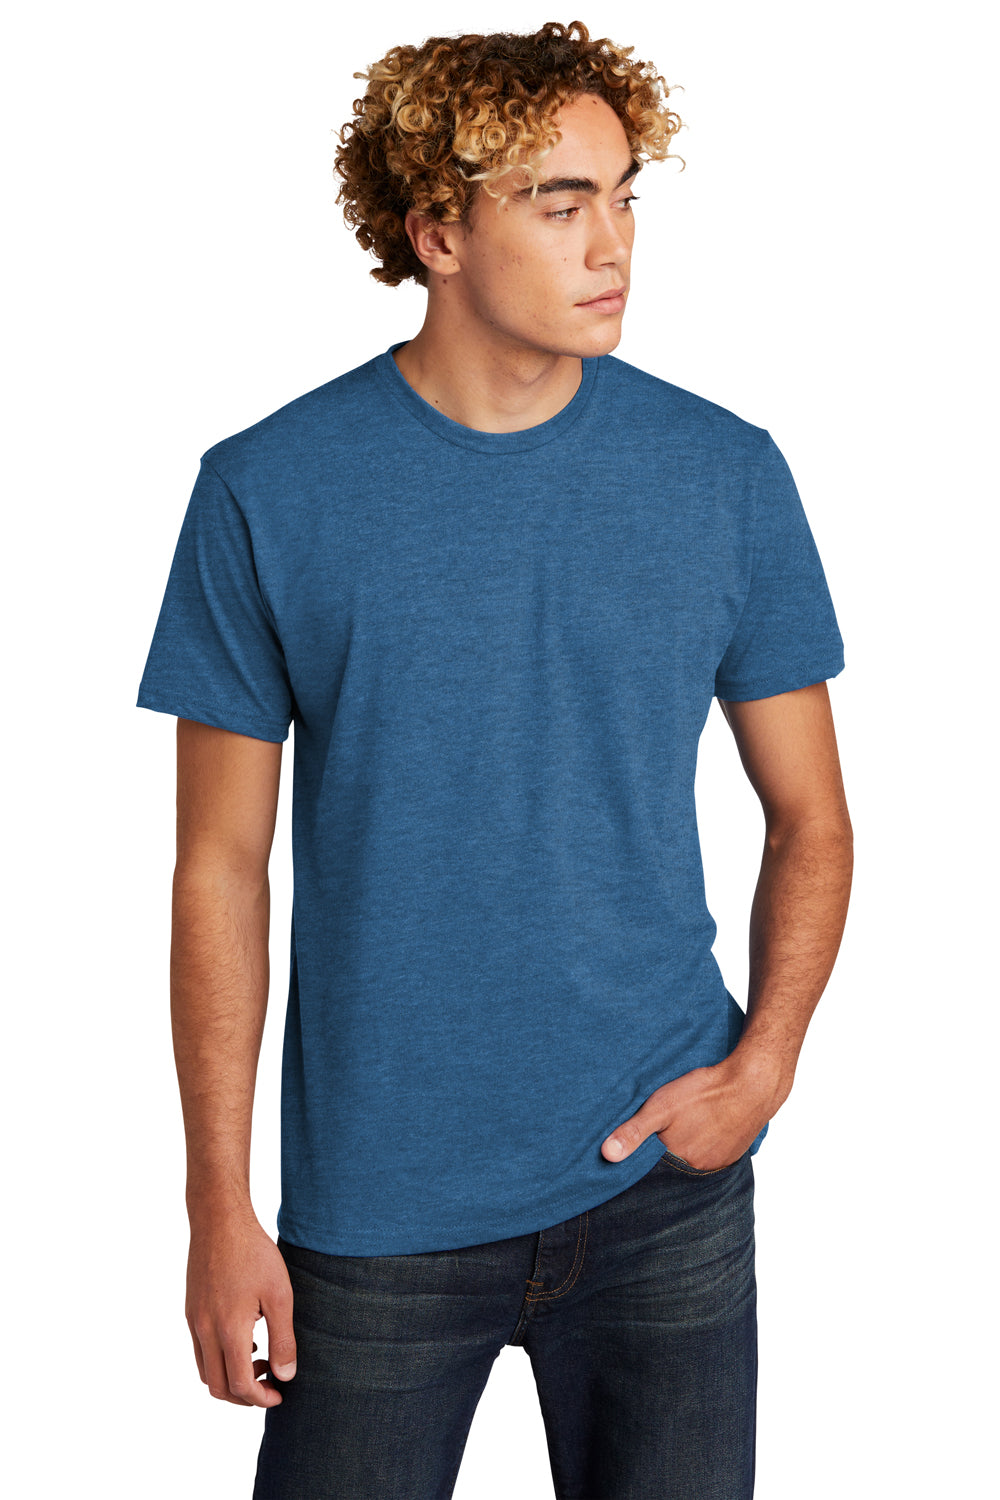 Next Level 6210 Unisex CVC T-Shirt - Heather Cool Blue - Xs